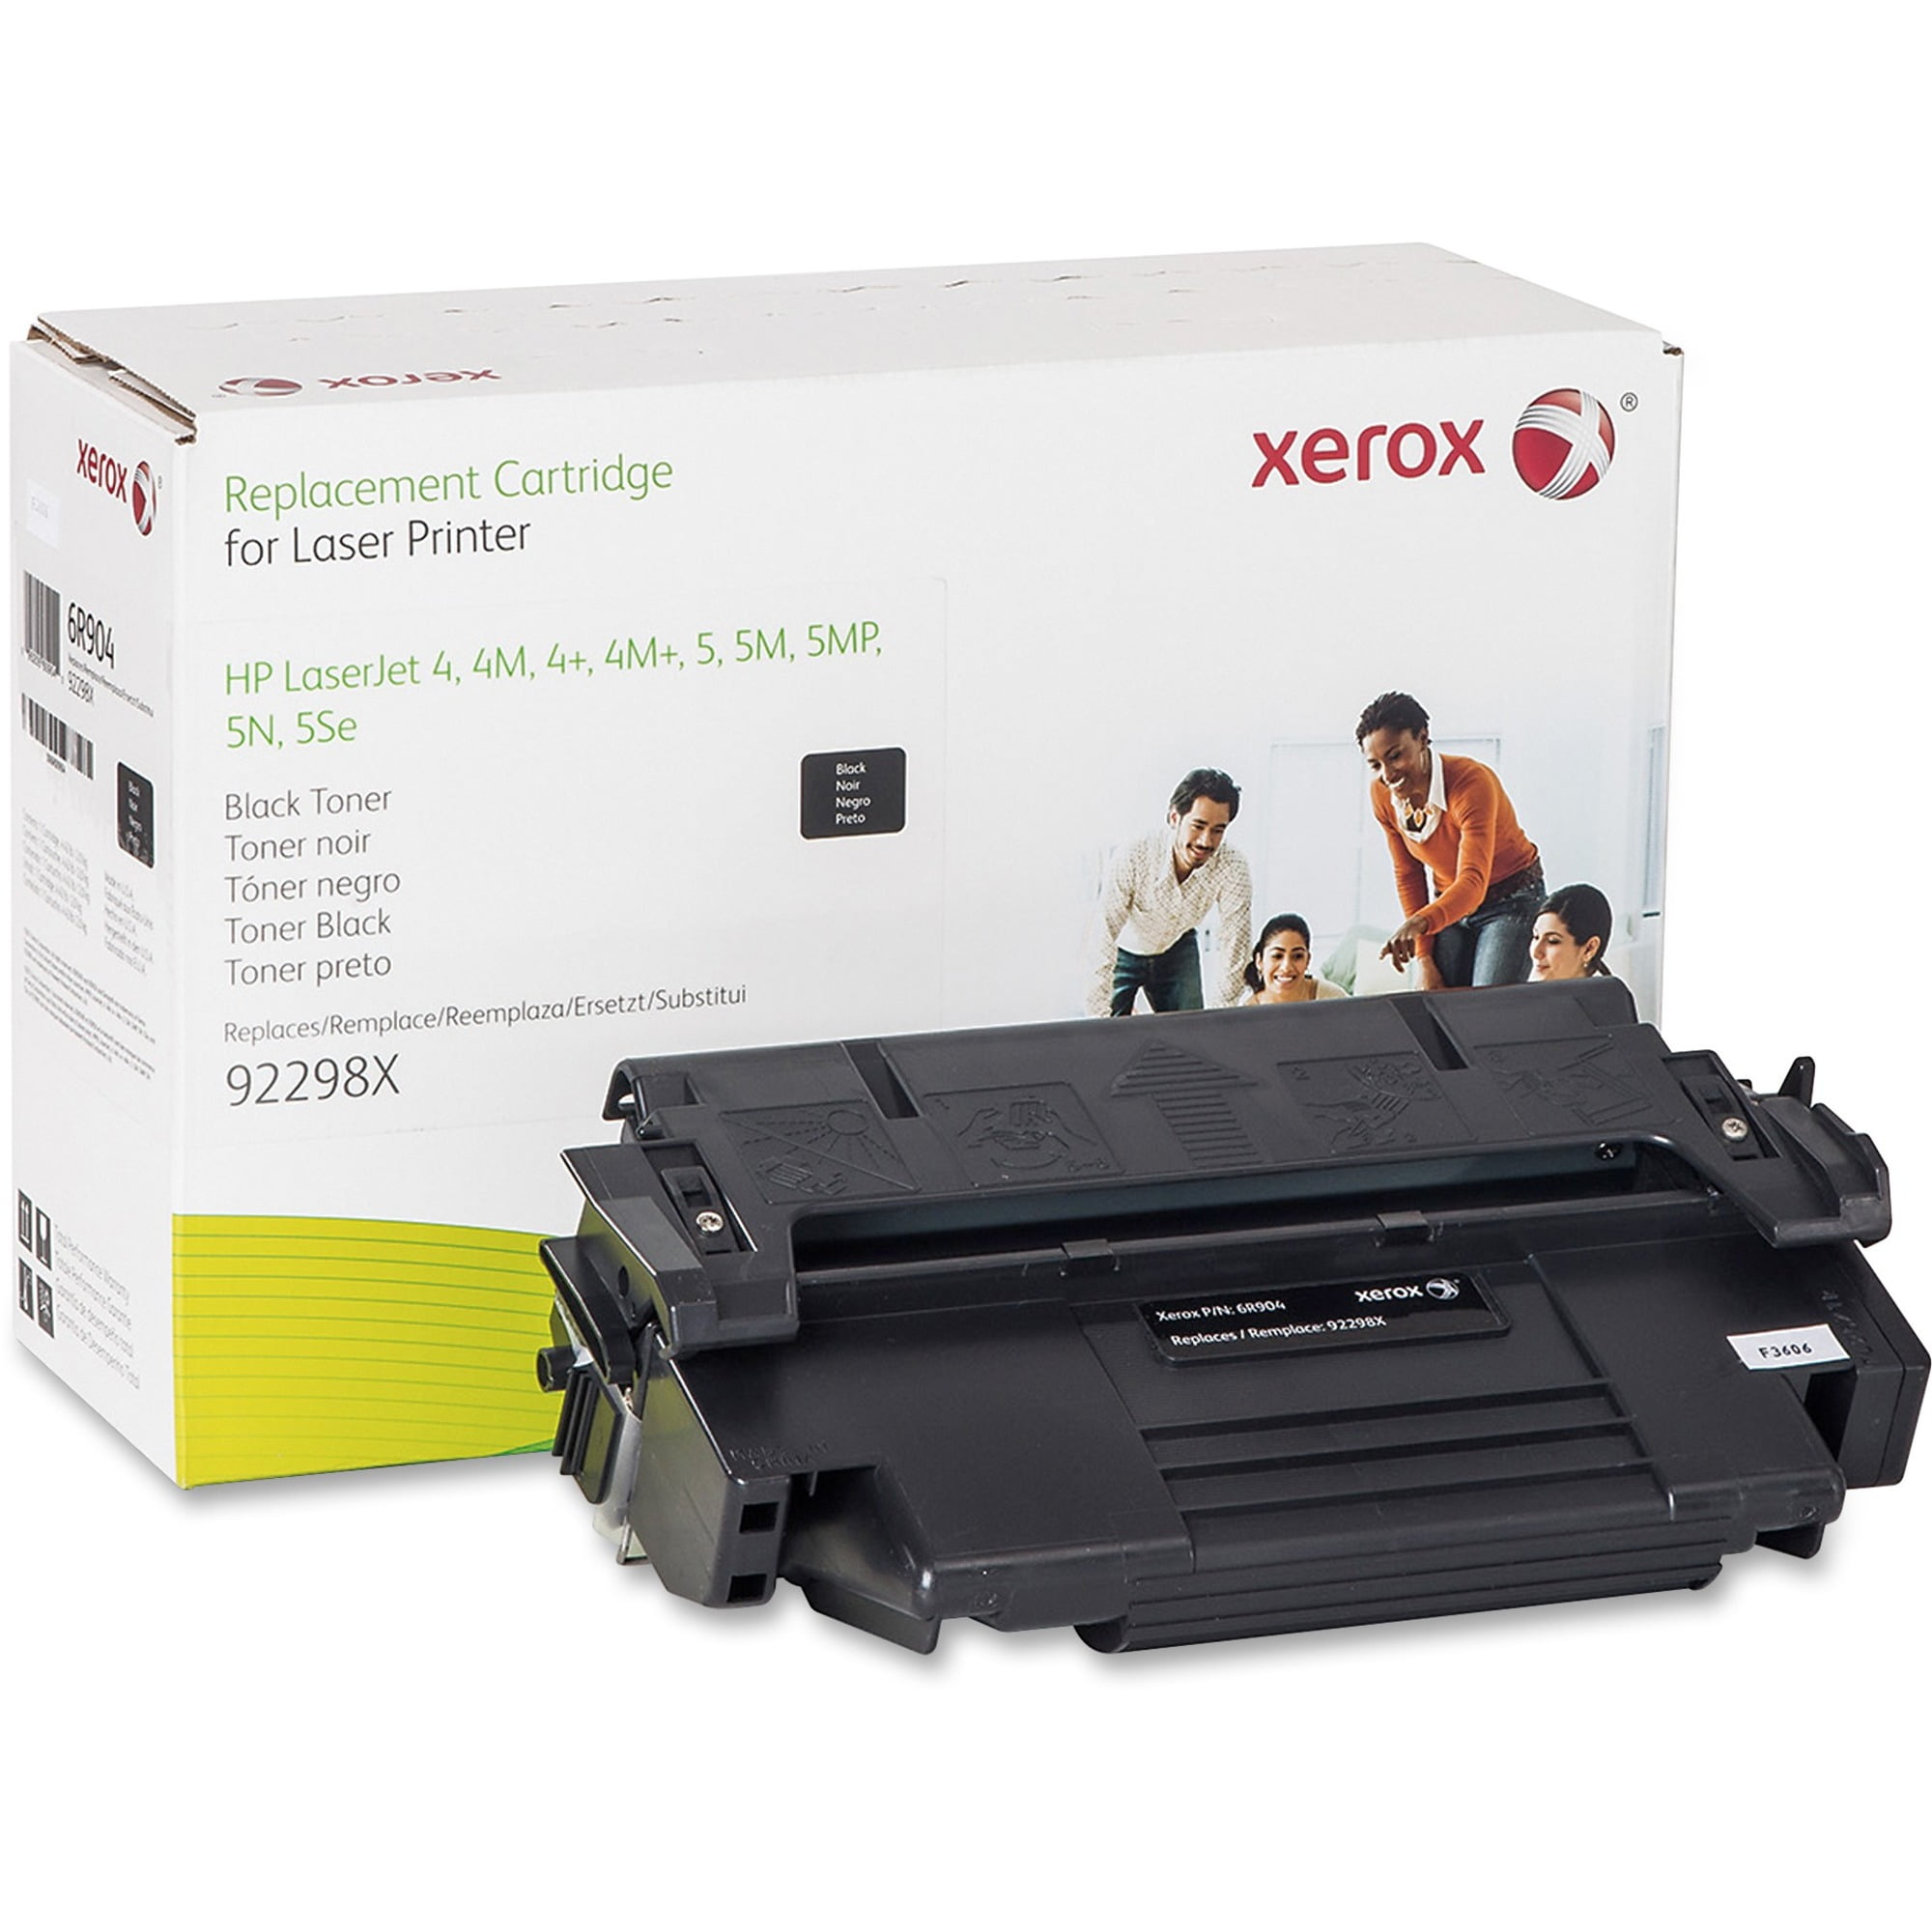 Slikke Peer maskinskriver XEROX Compatible LaserJet 4M Toner Cartridge (9,300 yield) - Walmart.com